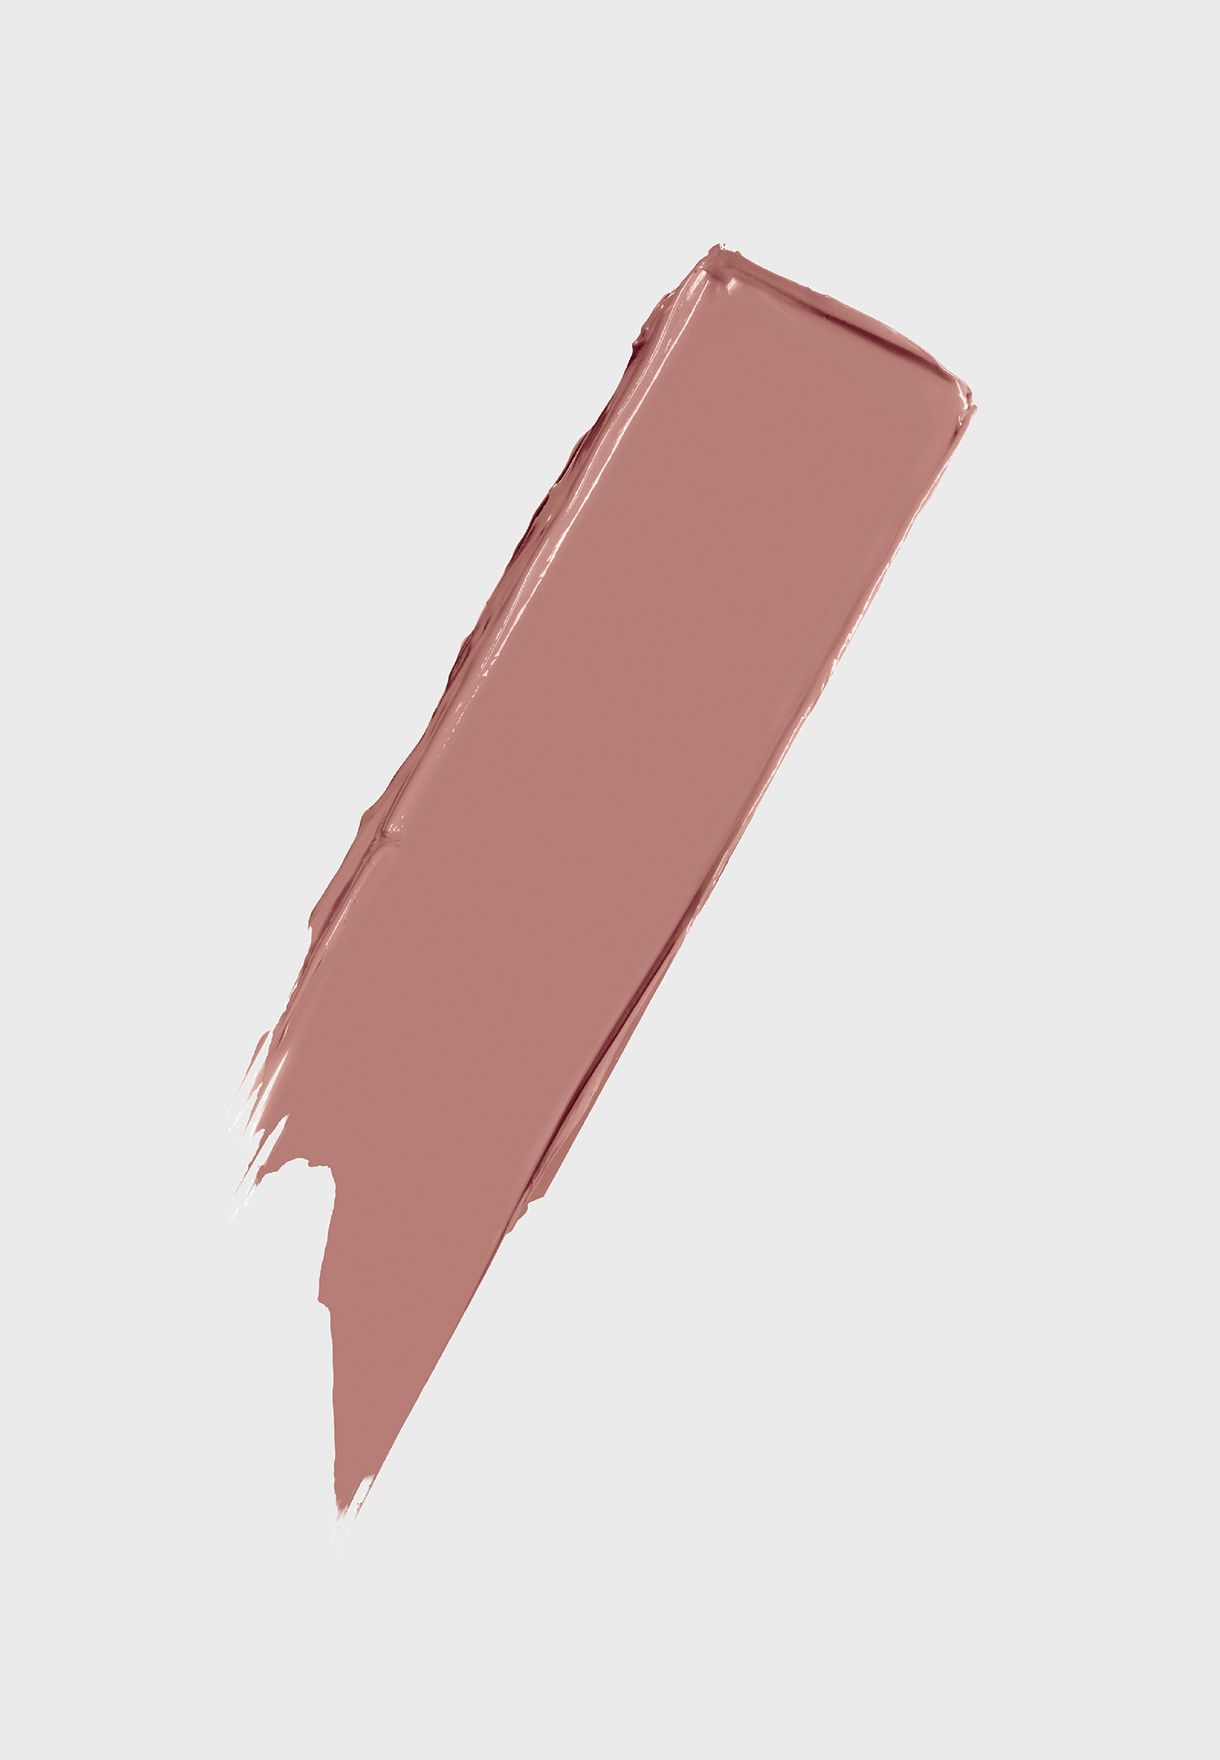 Artist Rouge Lipstick 152 - Sharp Nude